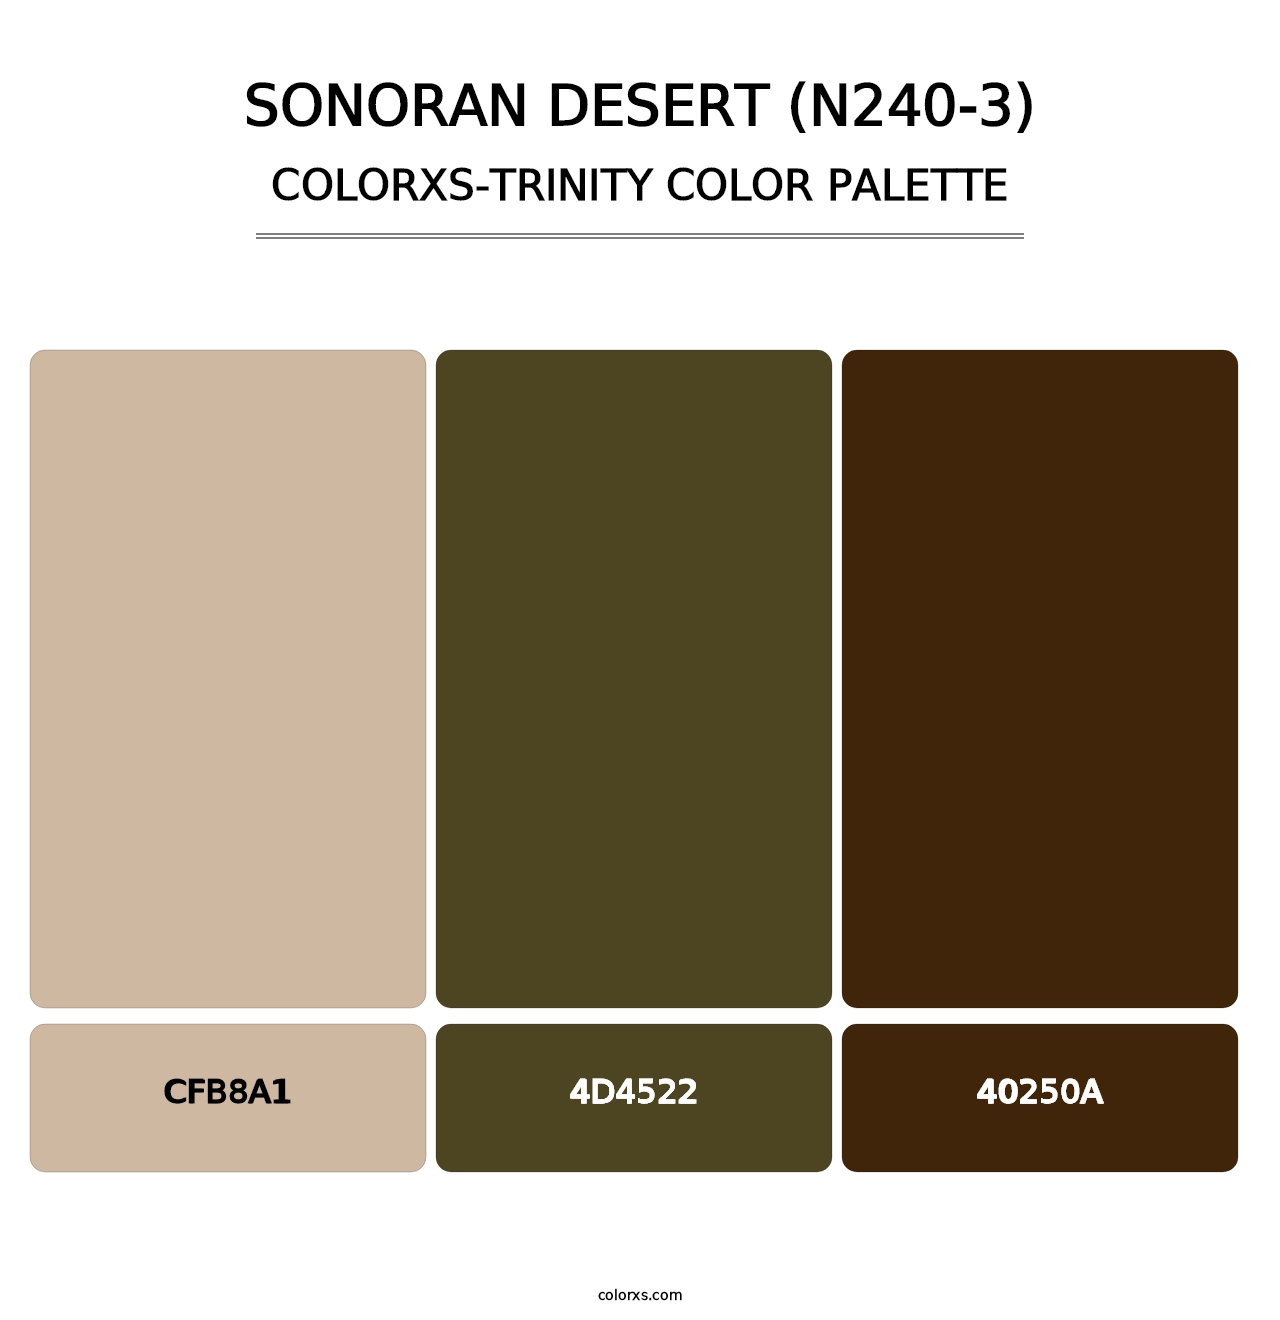 Sonoran Desert (N240-3) - Colorxs Trinity Palette